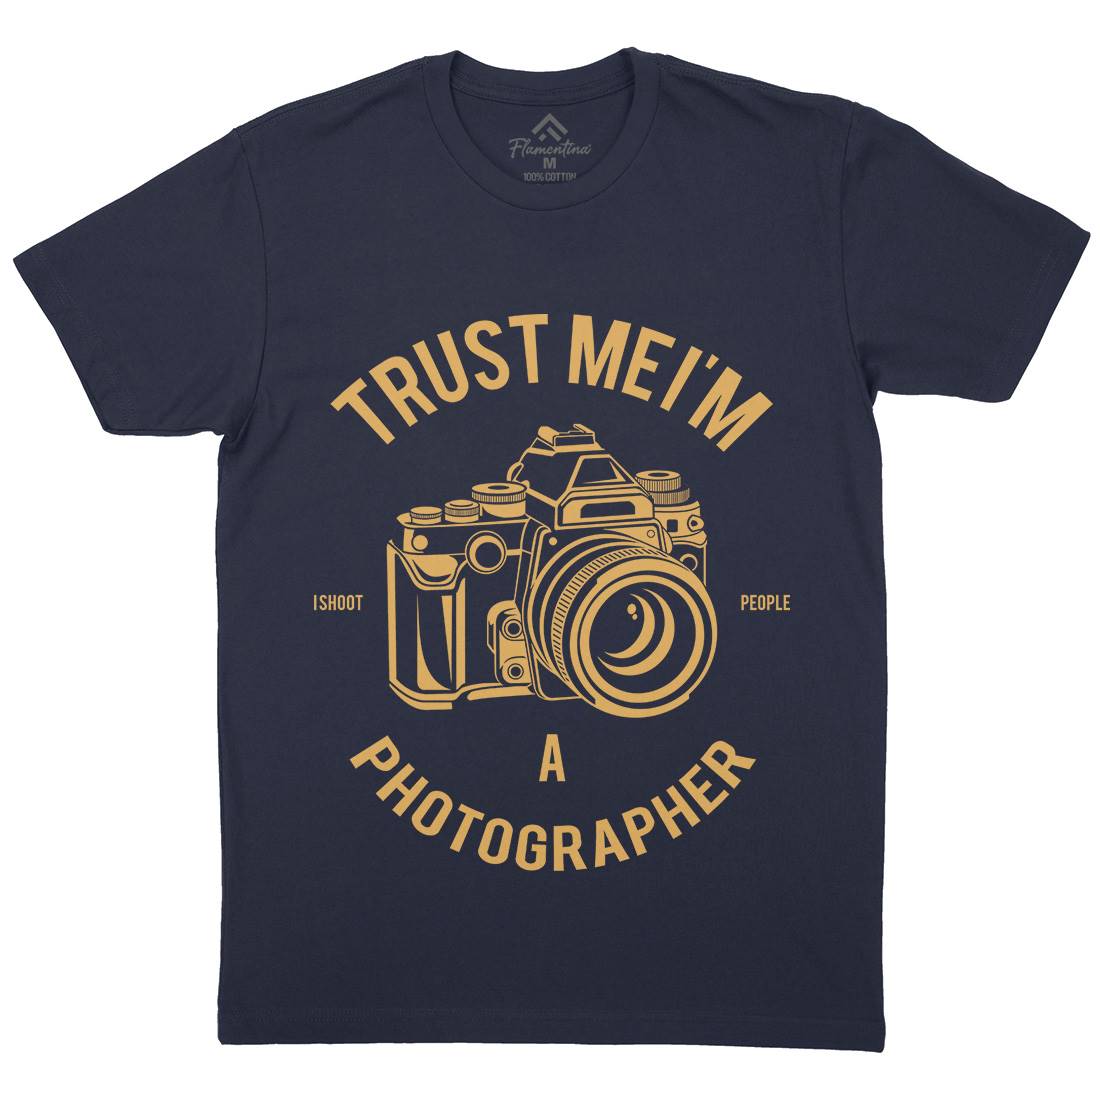 Photographer Mens Crew Neck T-Shirt Media A110